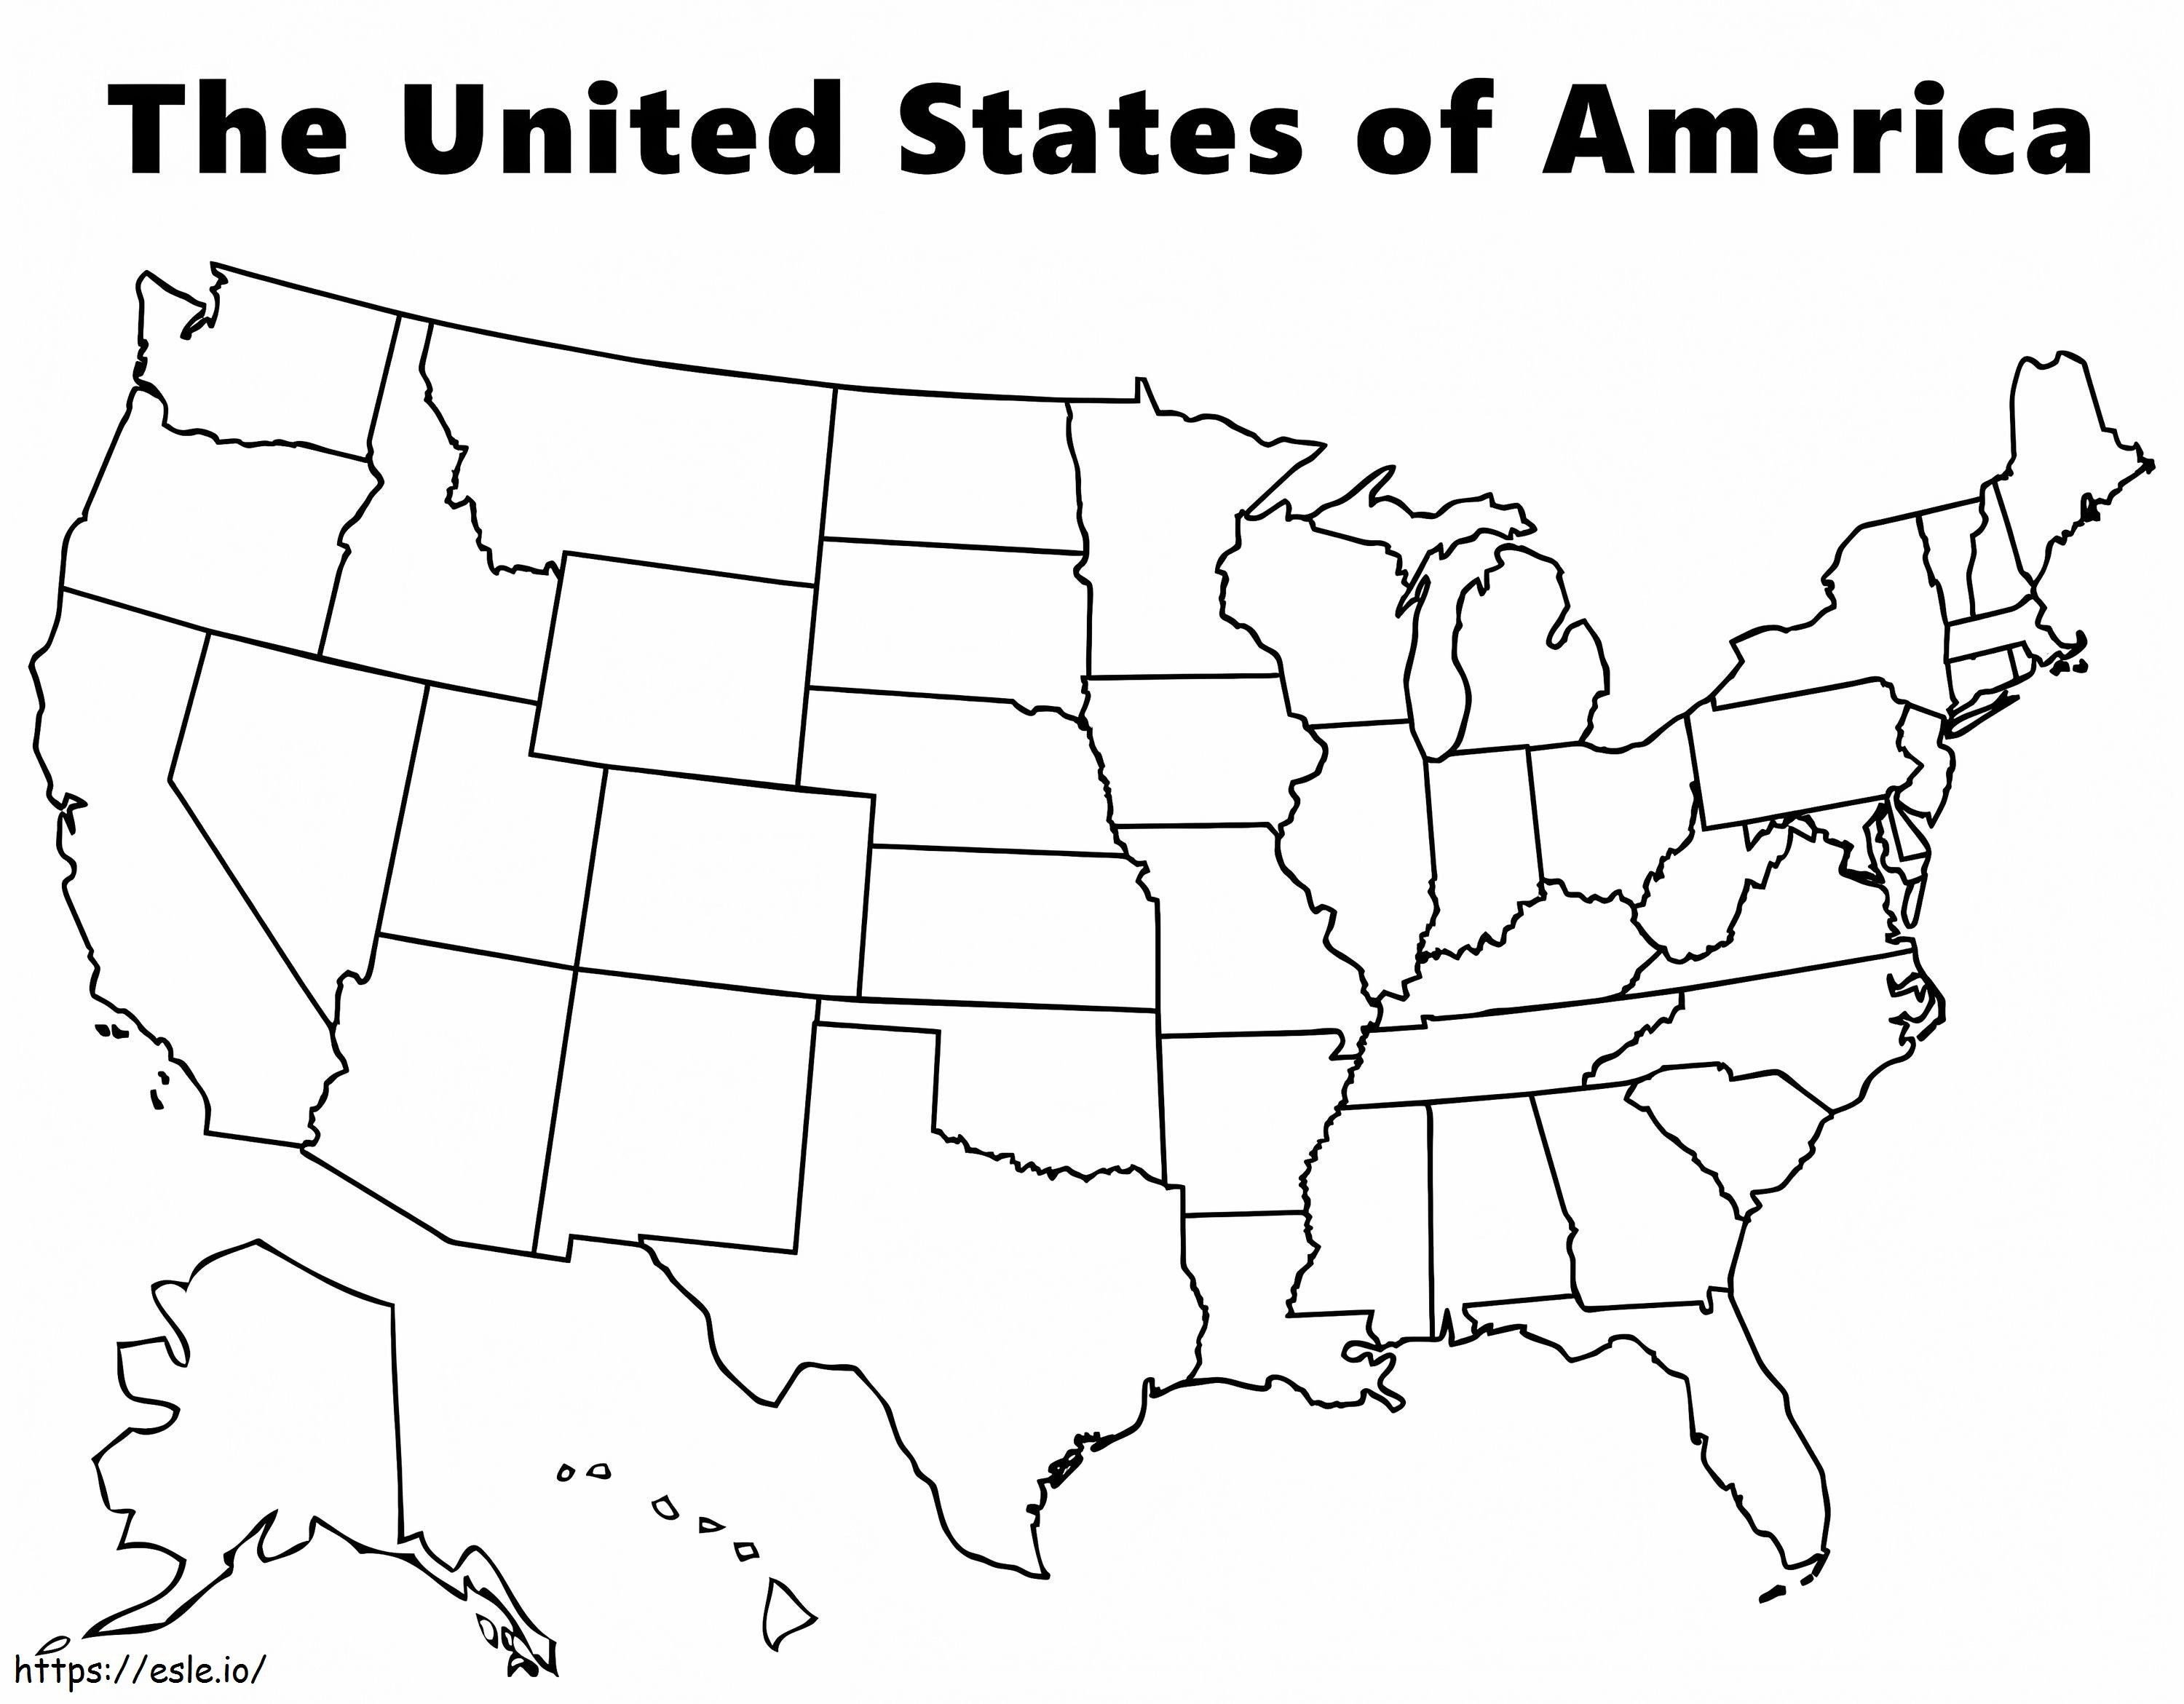 Página para colorir do mapa dos Estados Unidos da América para colorir